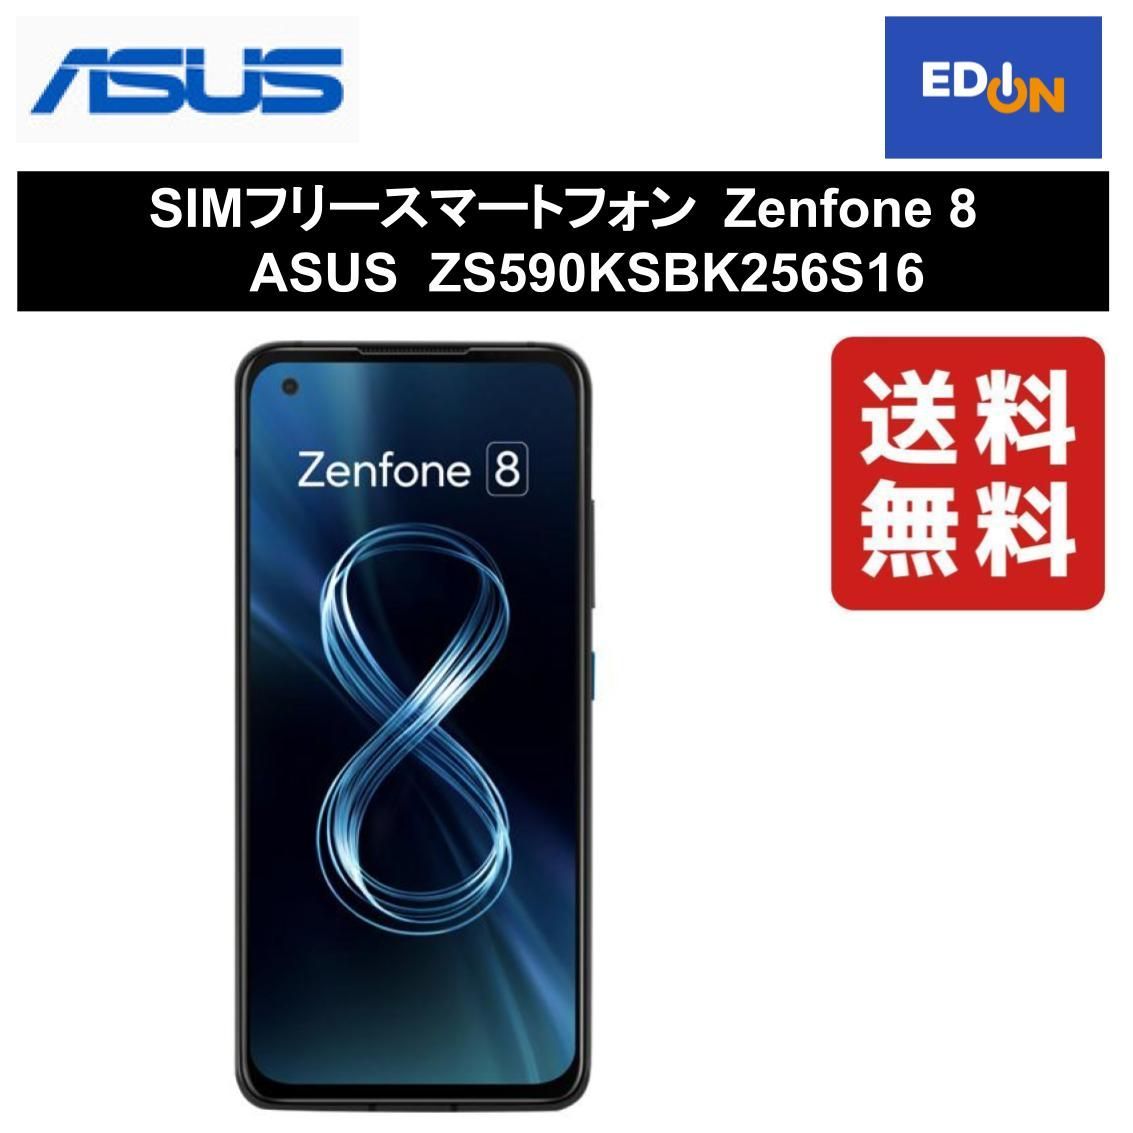 11917】SIMフリースマートフォン Zenfone 8 ASUS ZS590KSBK256S16 - メルカリ